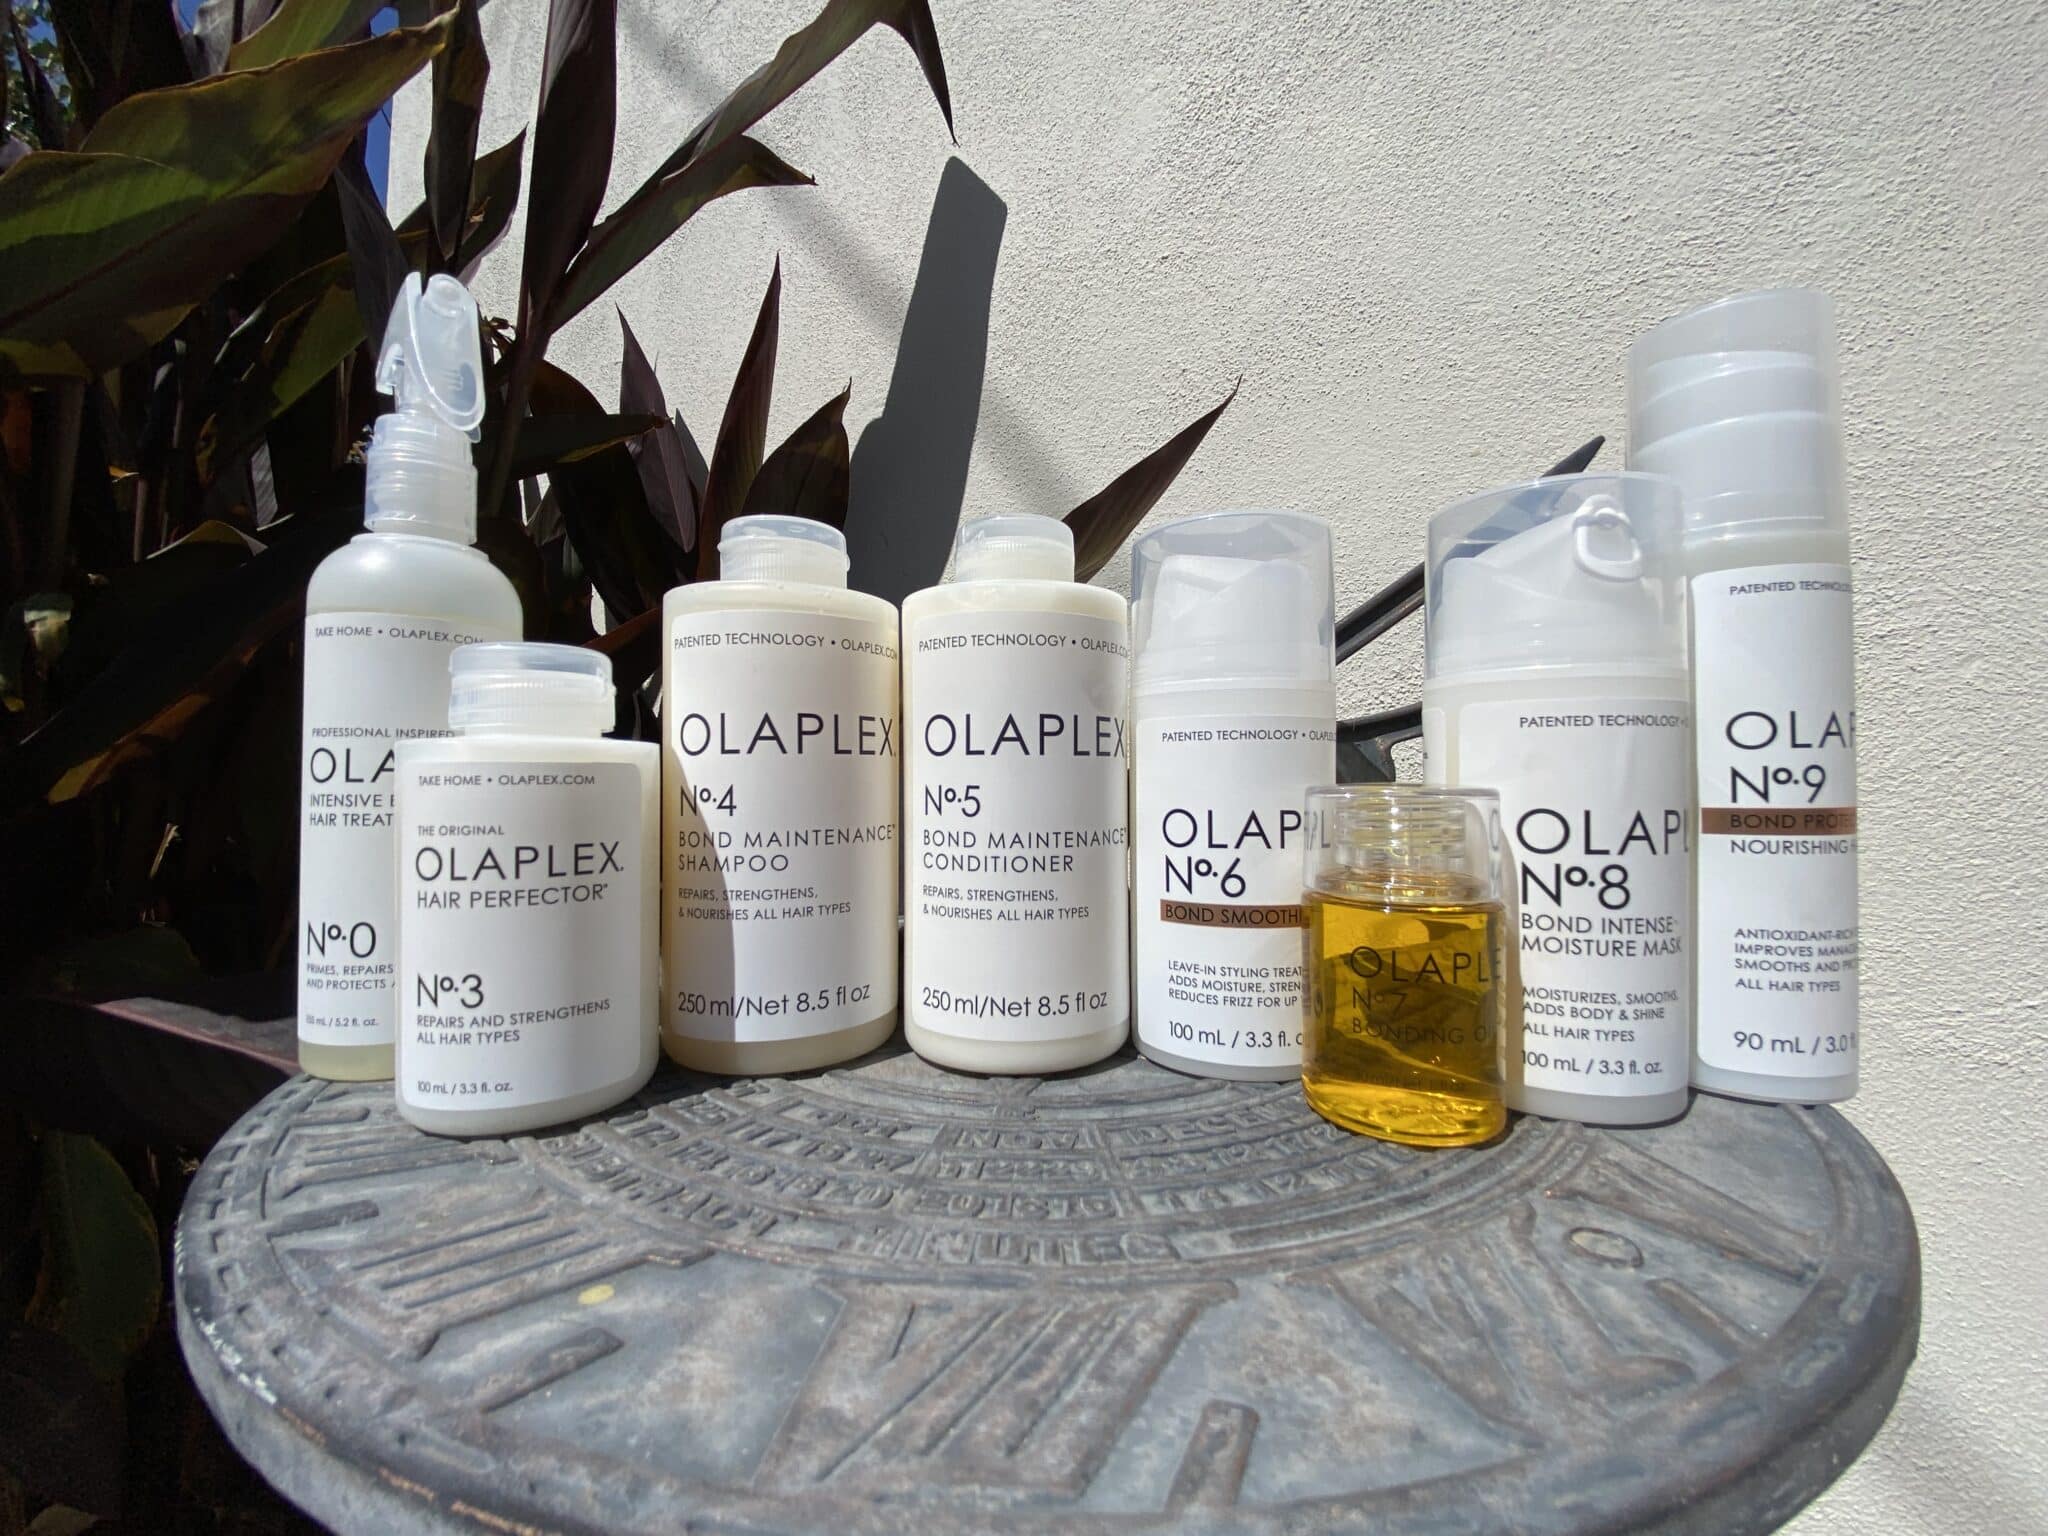 Does The Olaplex Hair Treatment Actually Work? (30-Day